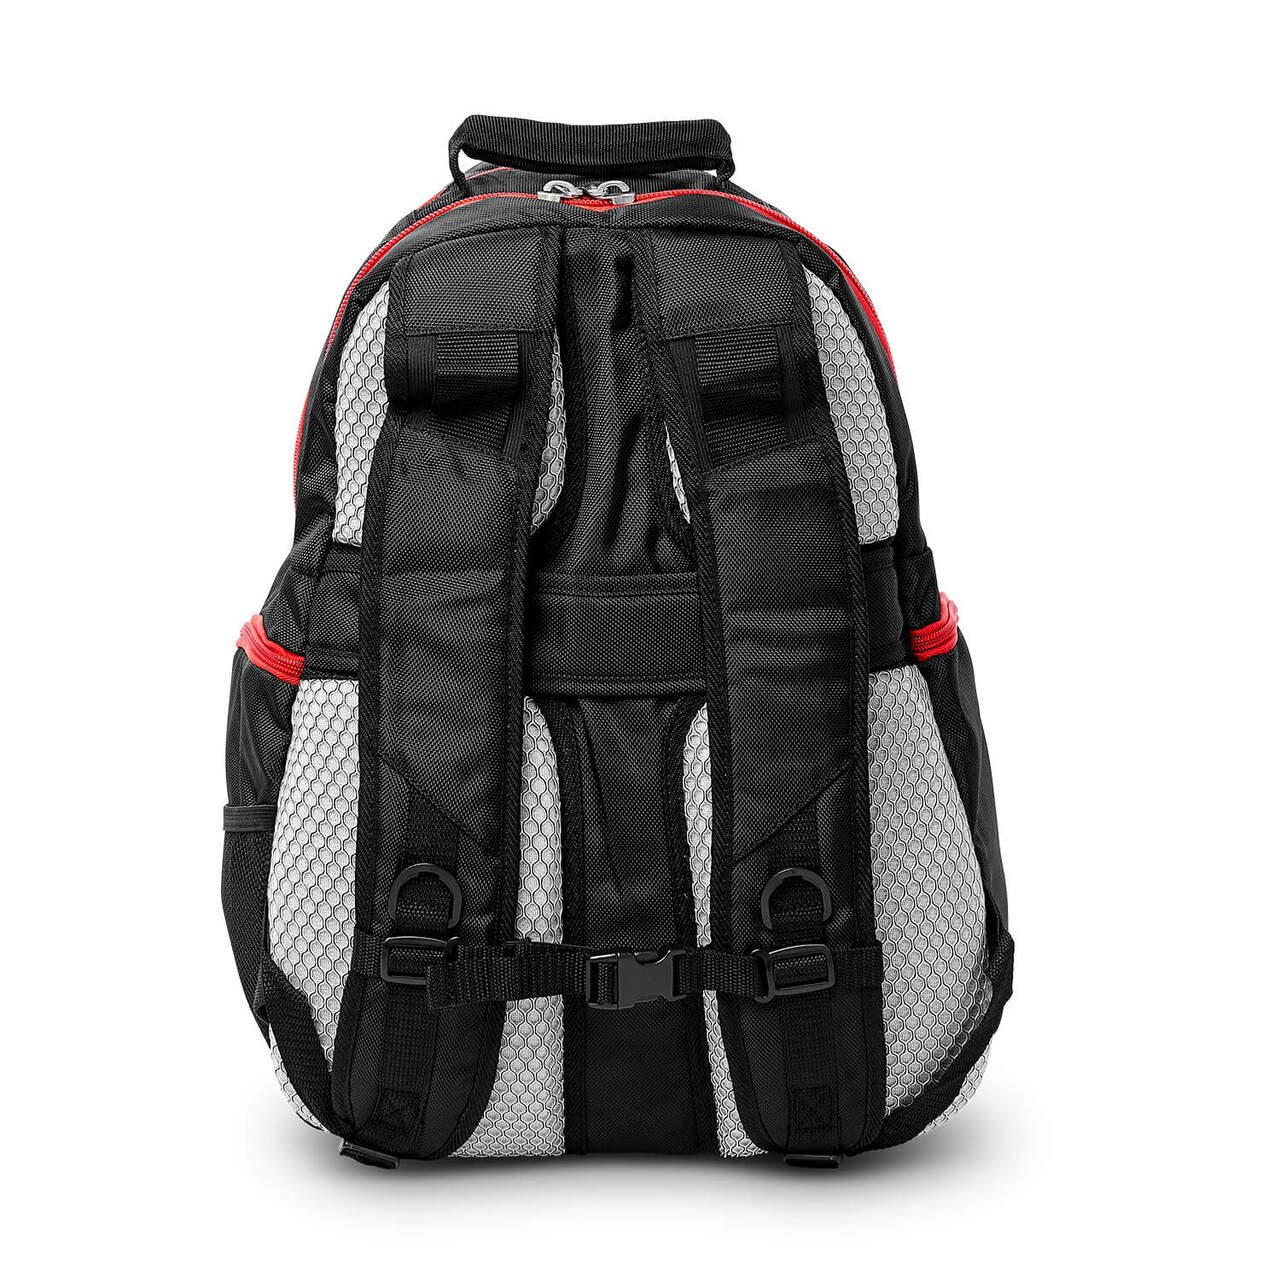 Sonners Backpack | Oklahoma Sooners Laptop Backpack